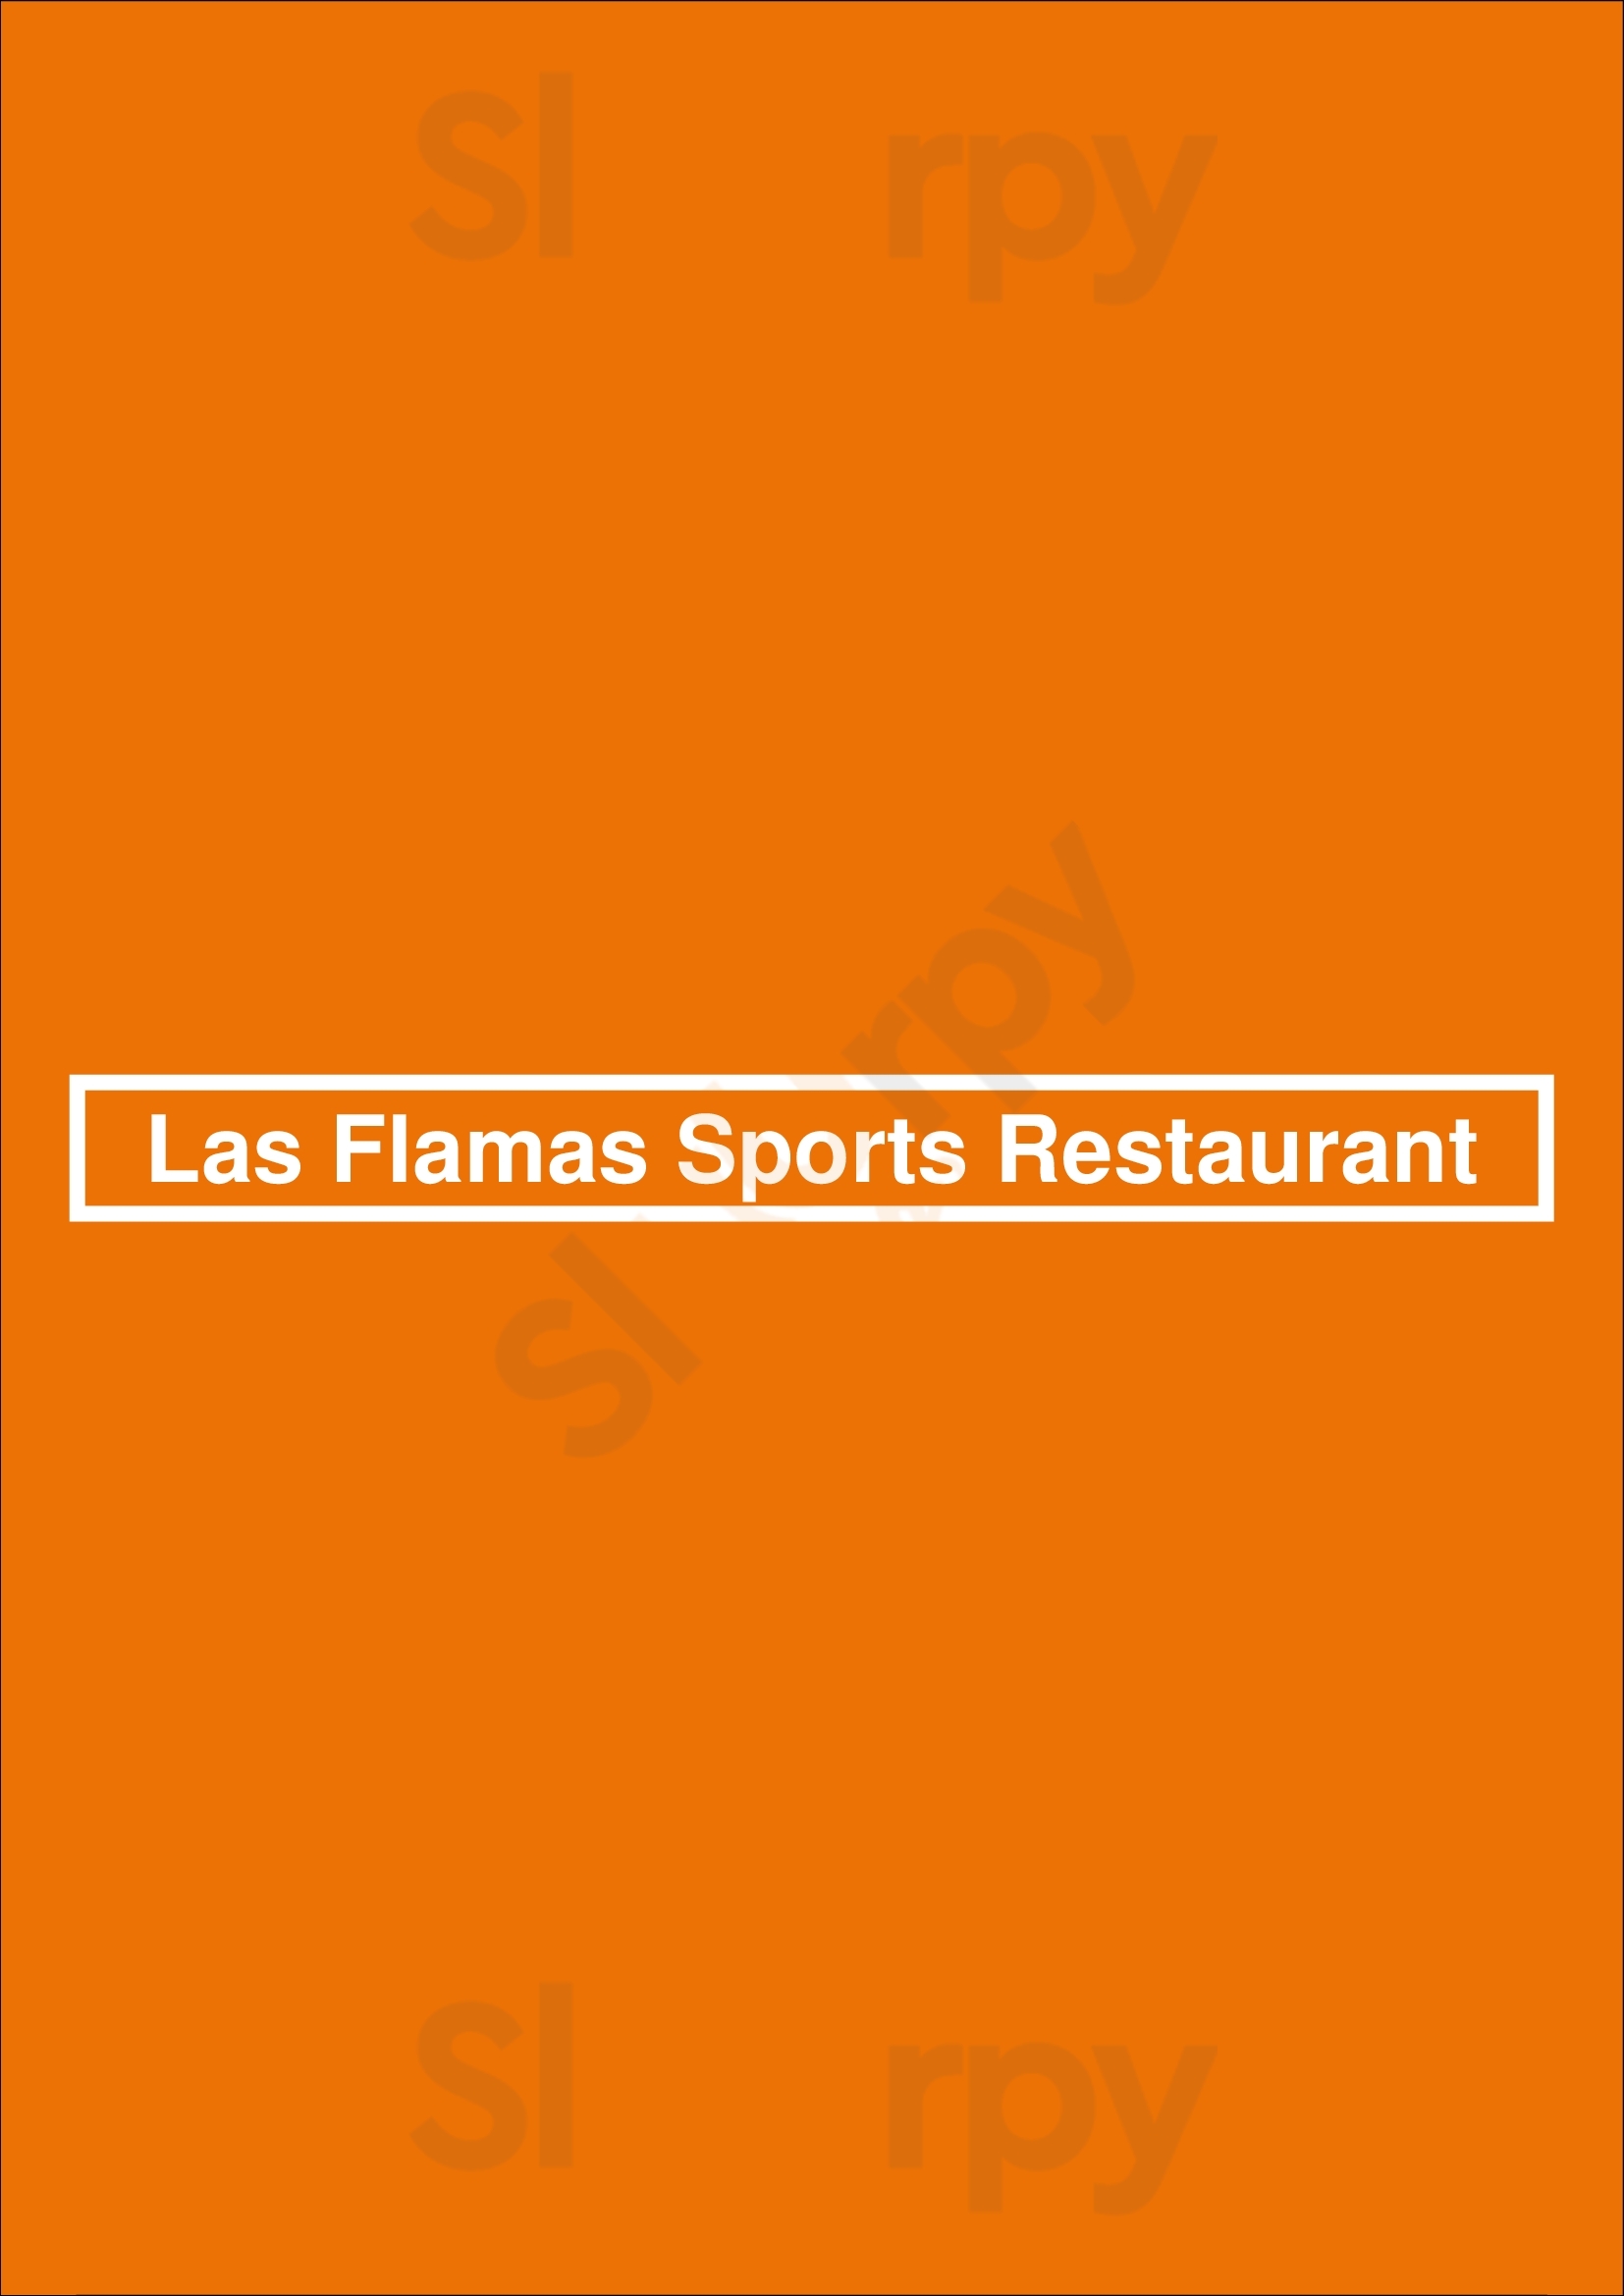 Las Flamas Sports Restaurant Dallas Menu - 1